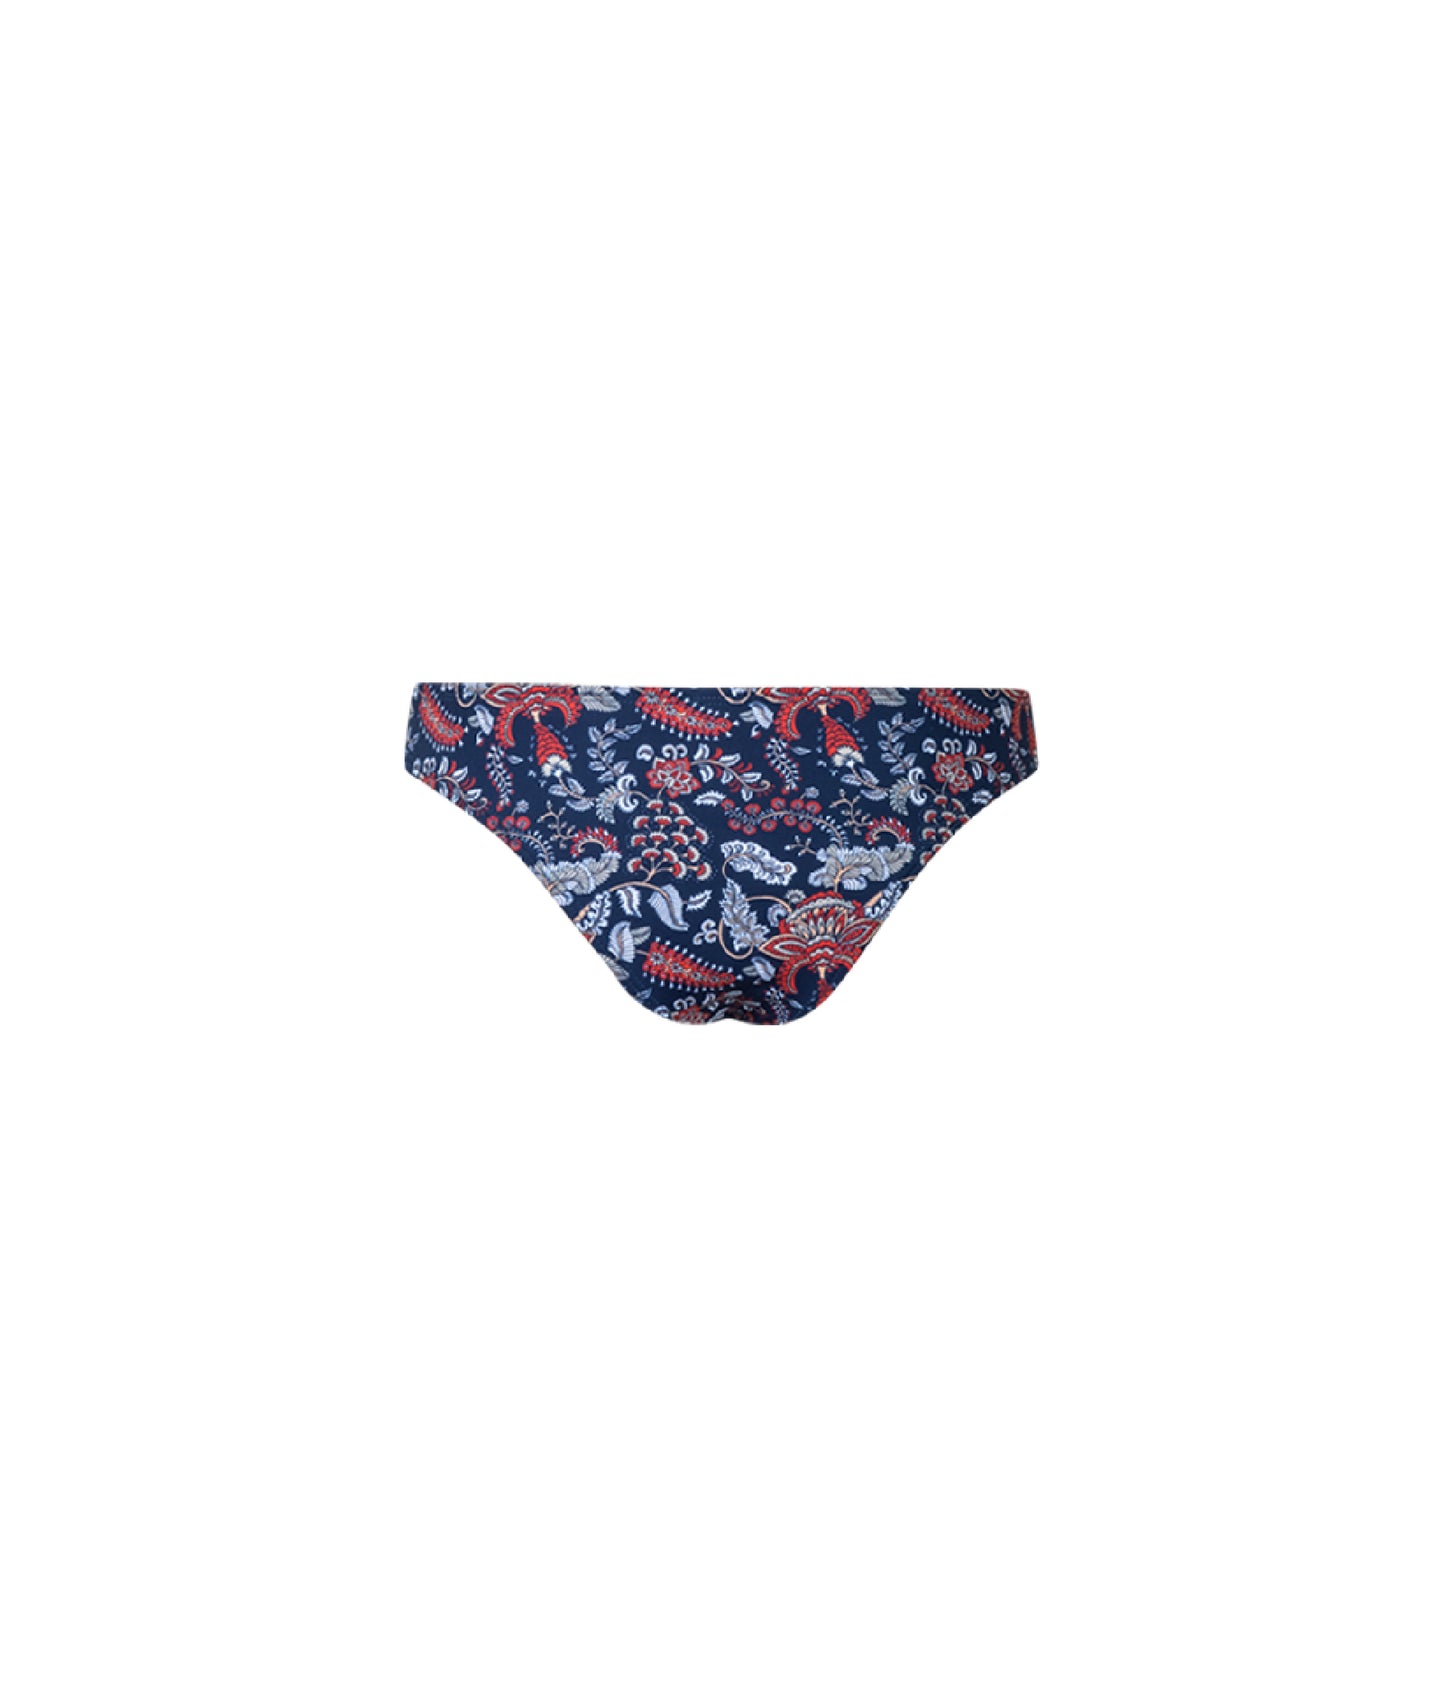 Verdelimon - Bikini Bottom - Tunas - Printed - Blue Floral - Back